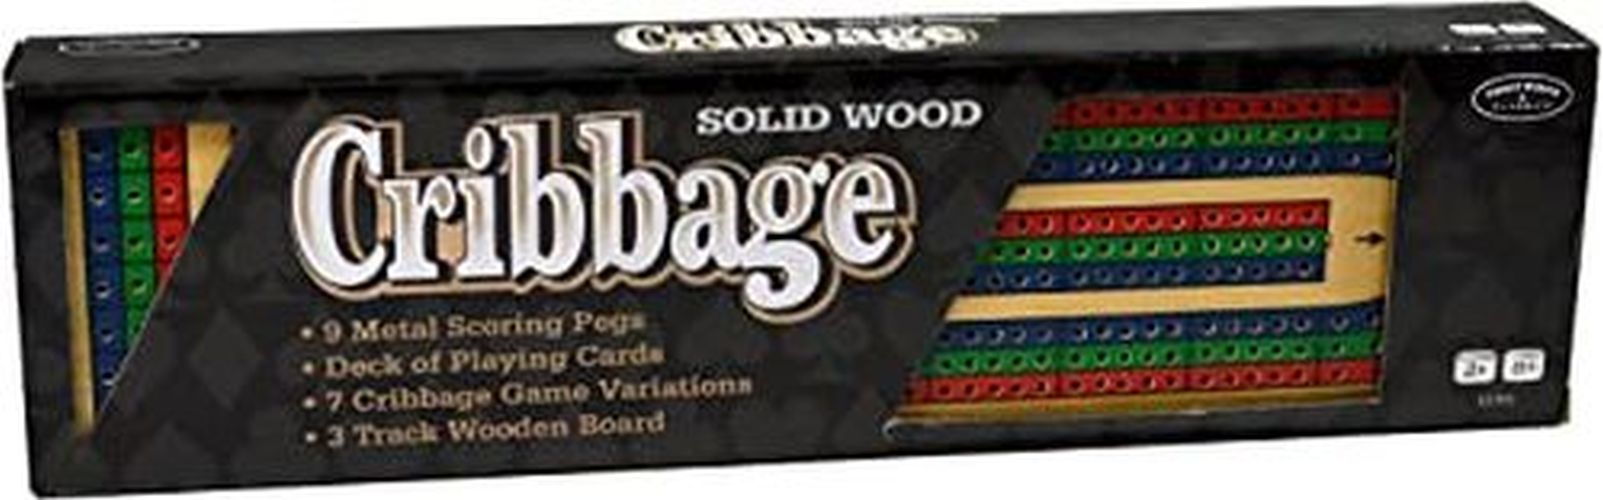 UNIVERSITY GAMES Cribbage Solid Wood Game - GAMES